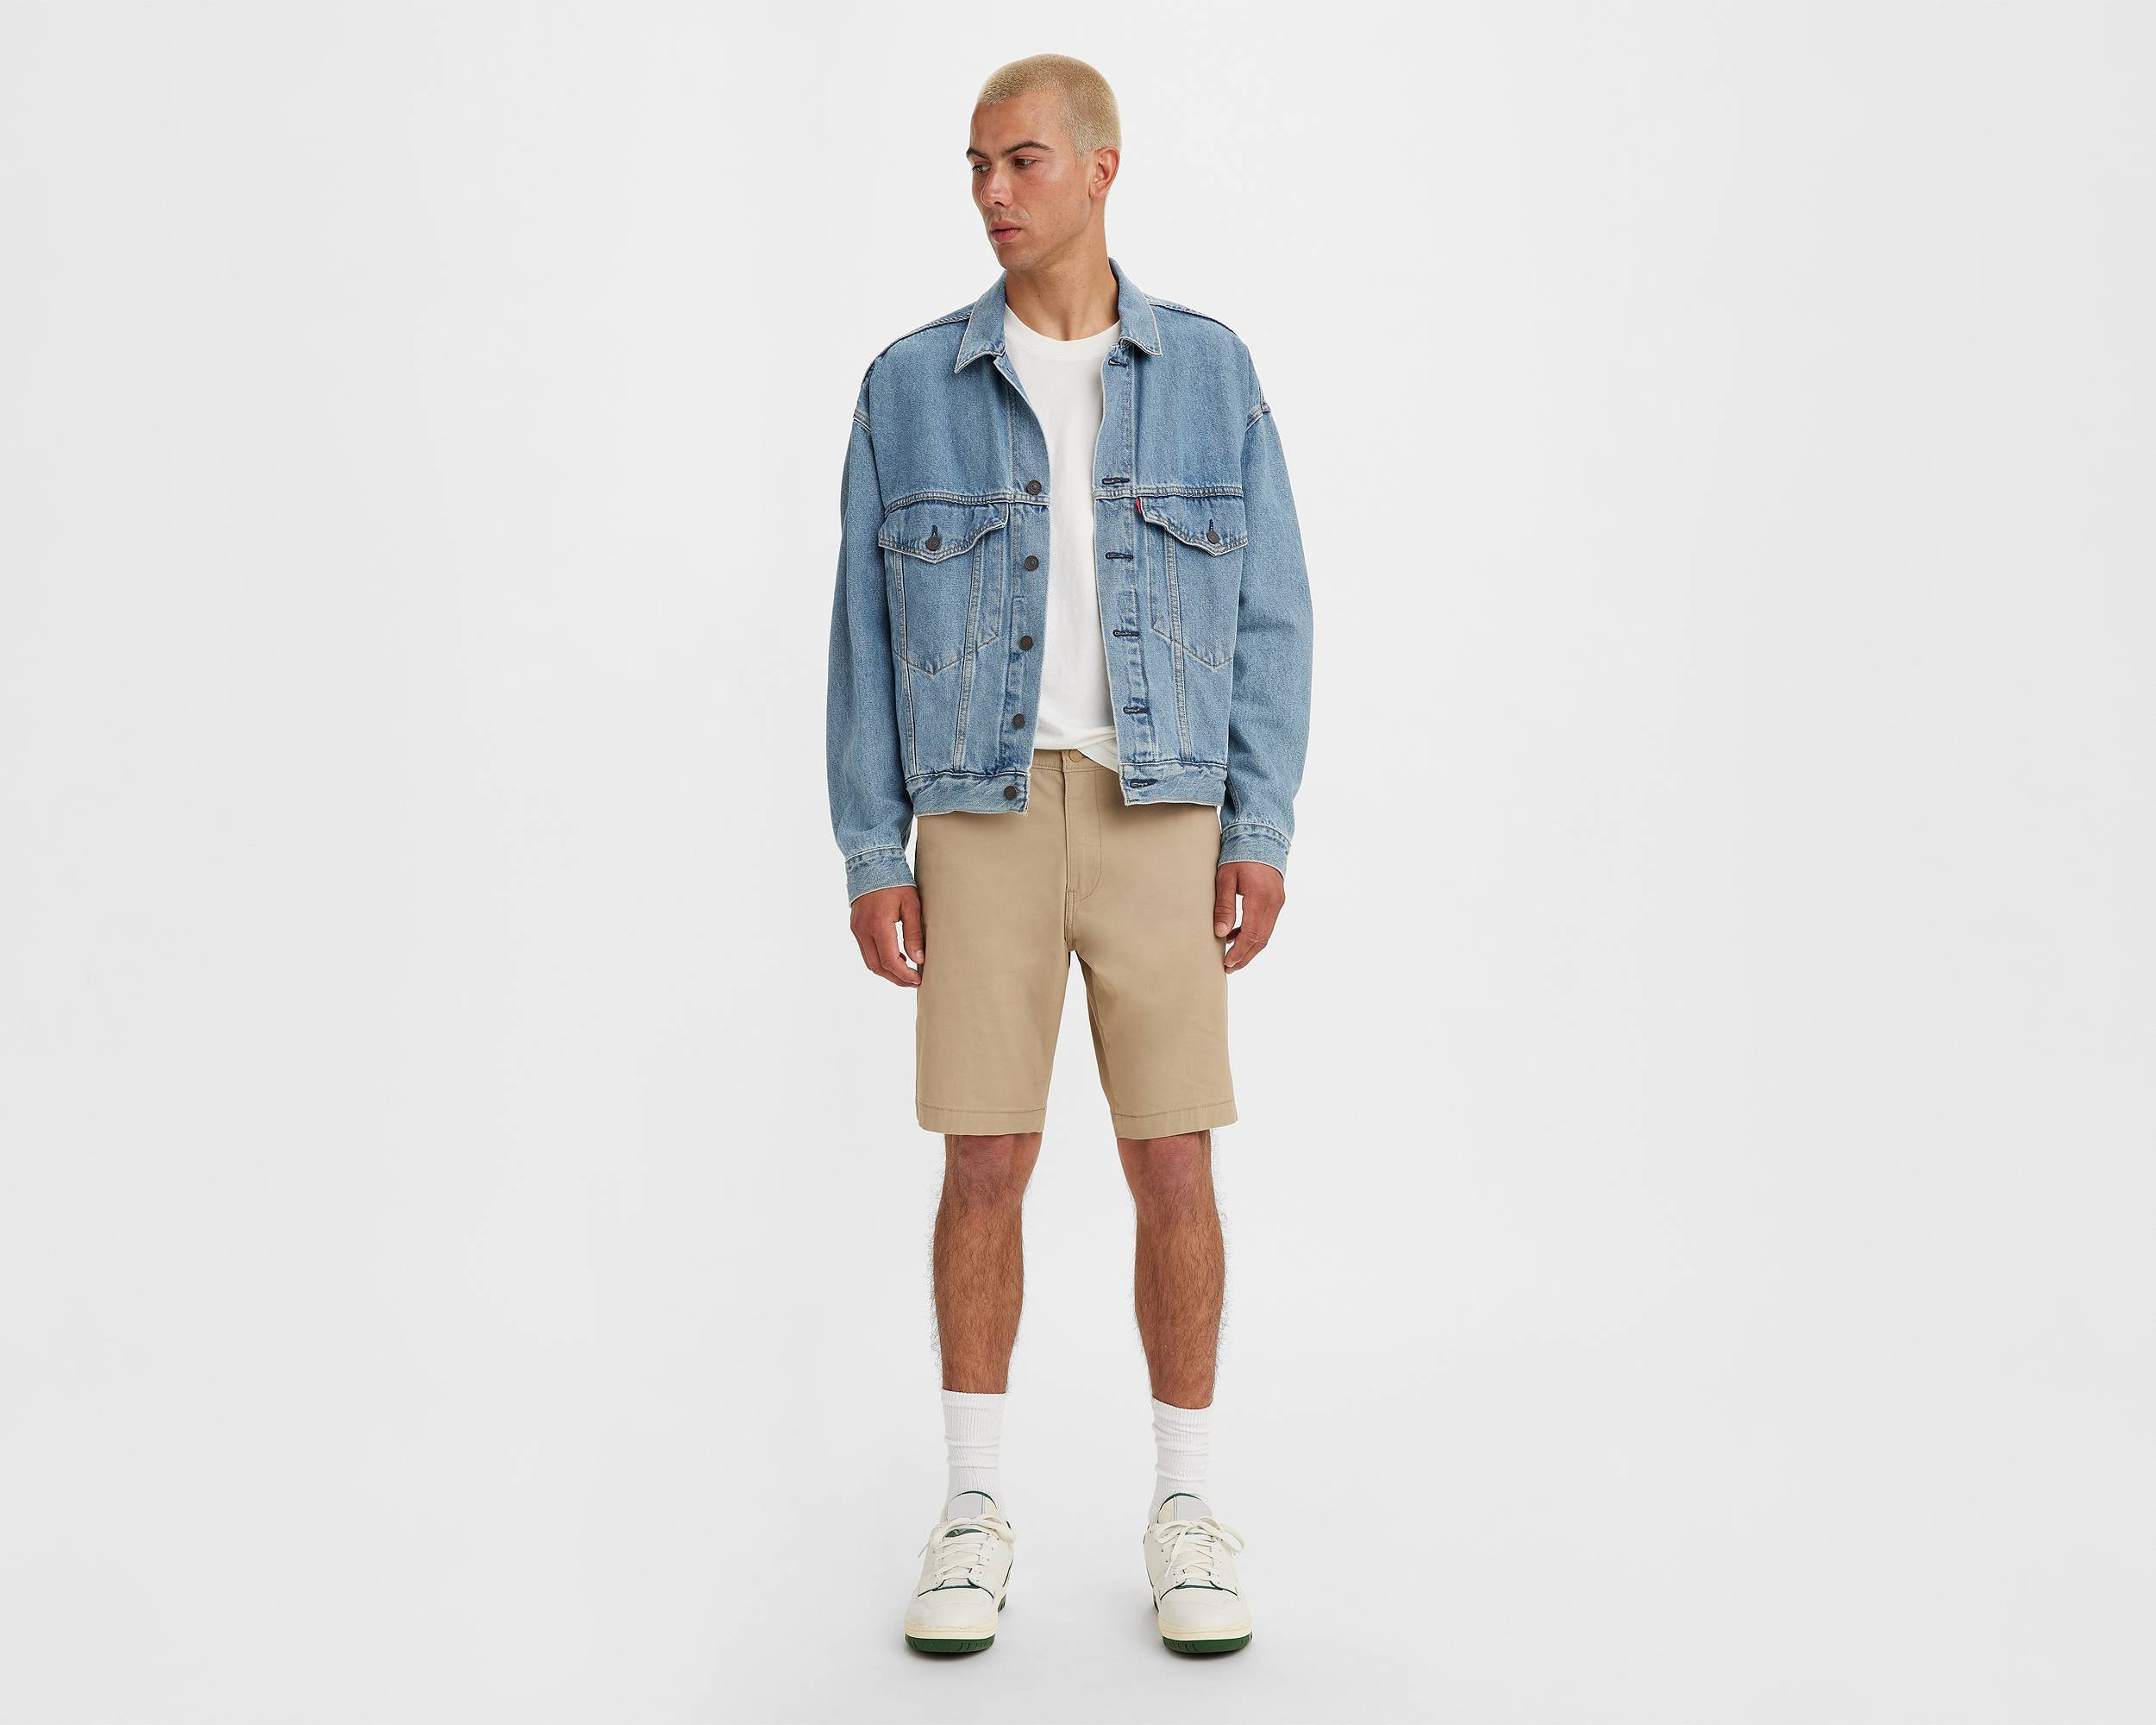 Assumption Secret Prey Levi's® XX Chino Taper Shorts - Levi's Jeans, Jackets & Clothing